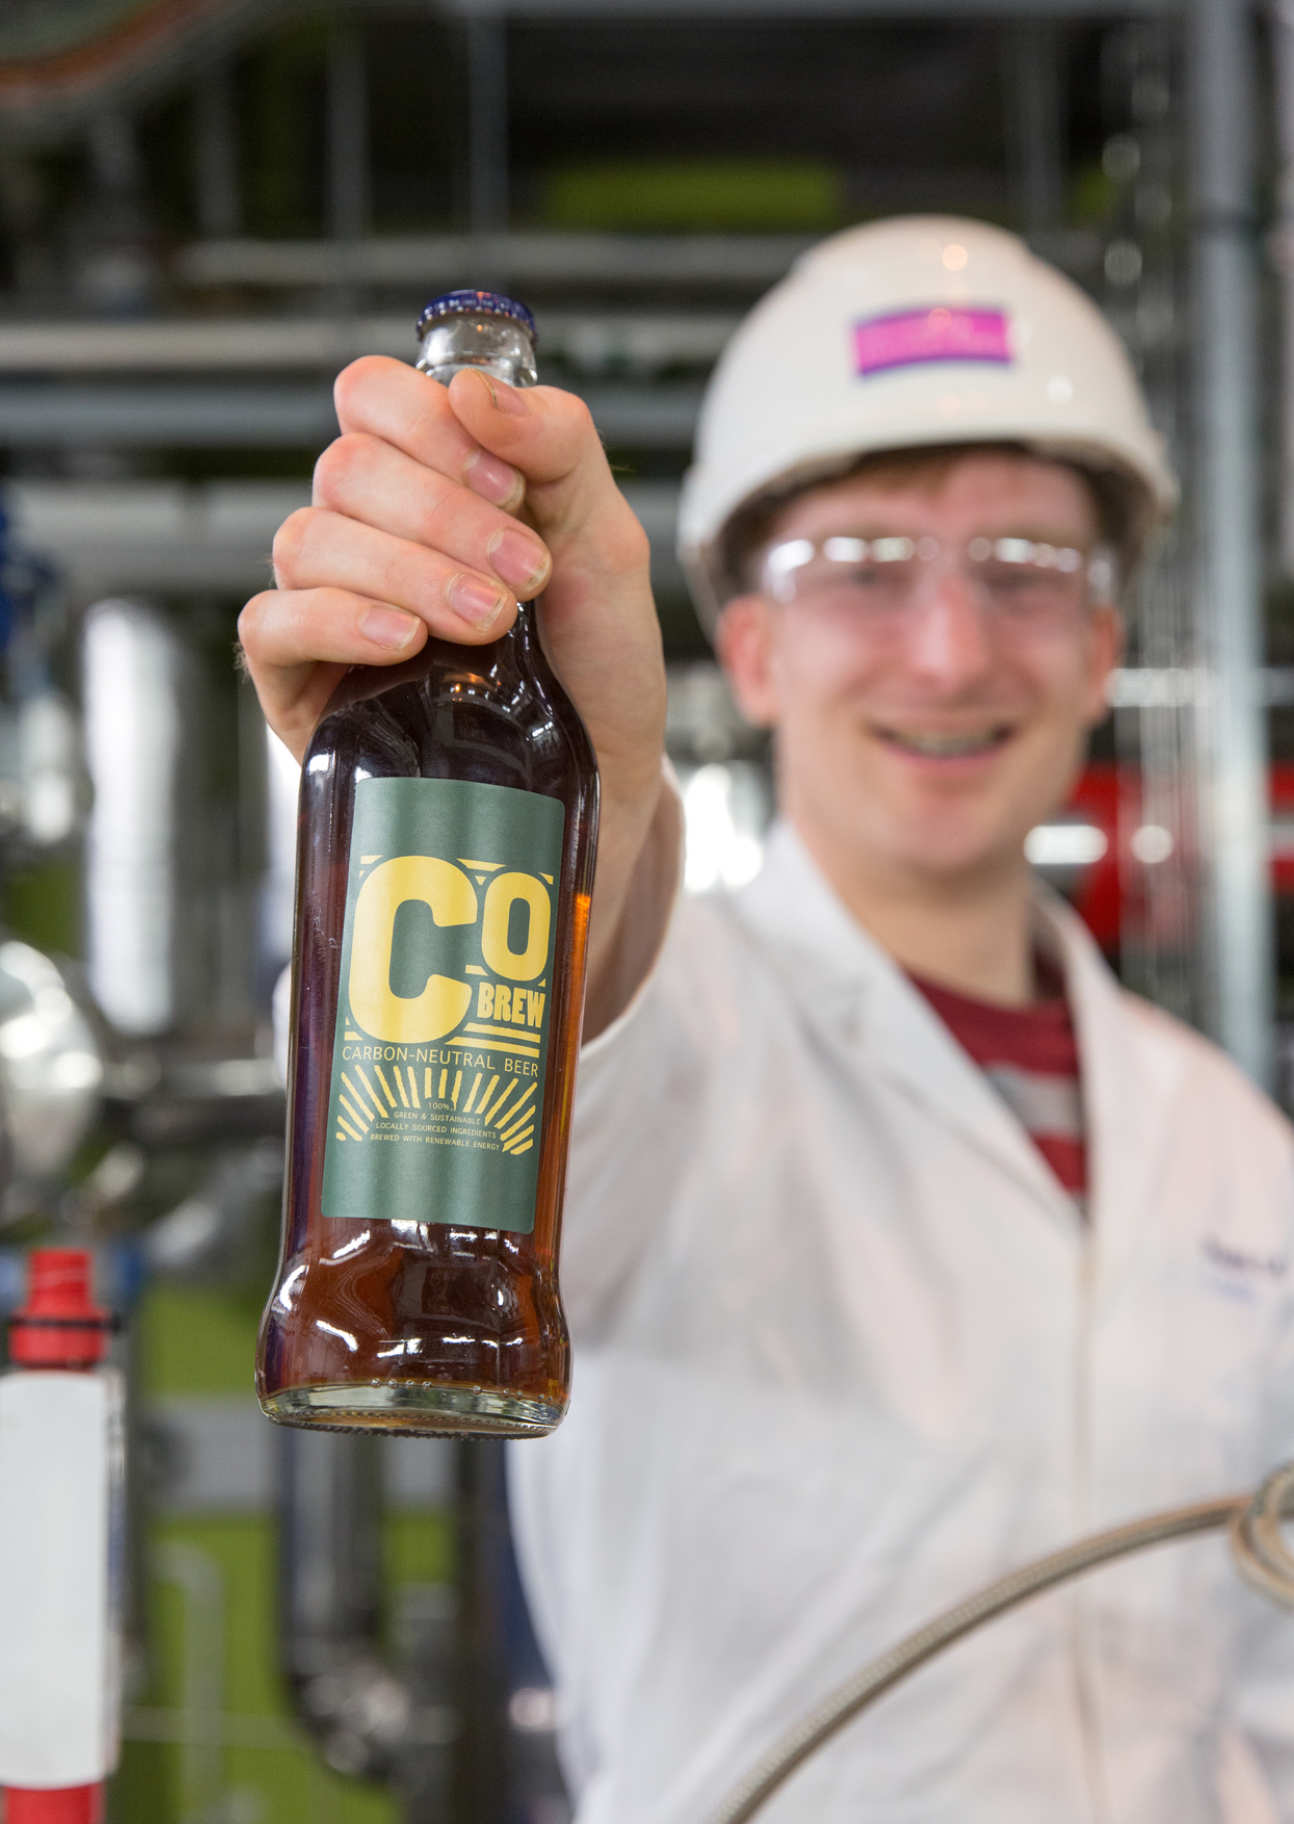 A bottle of CObrew beer held by Matt Barker